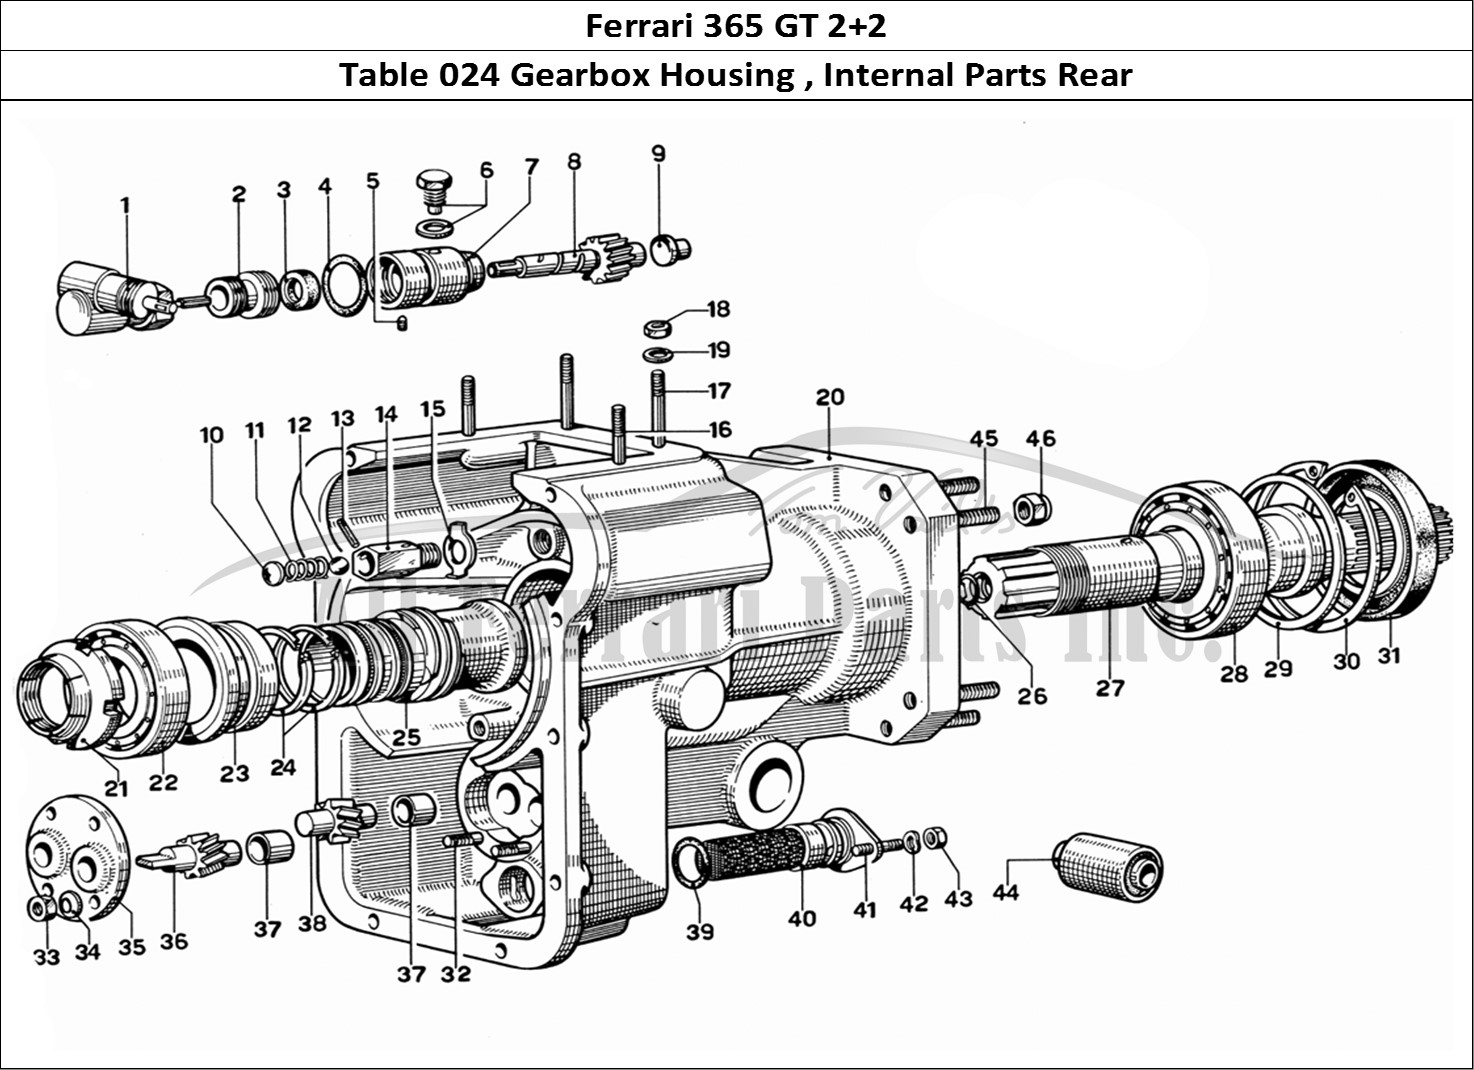 Ferrari Parts Ferrari 365 GT 2+2 (Mechanical) Page 024 Rear Gear Box Housing